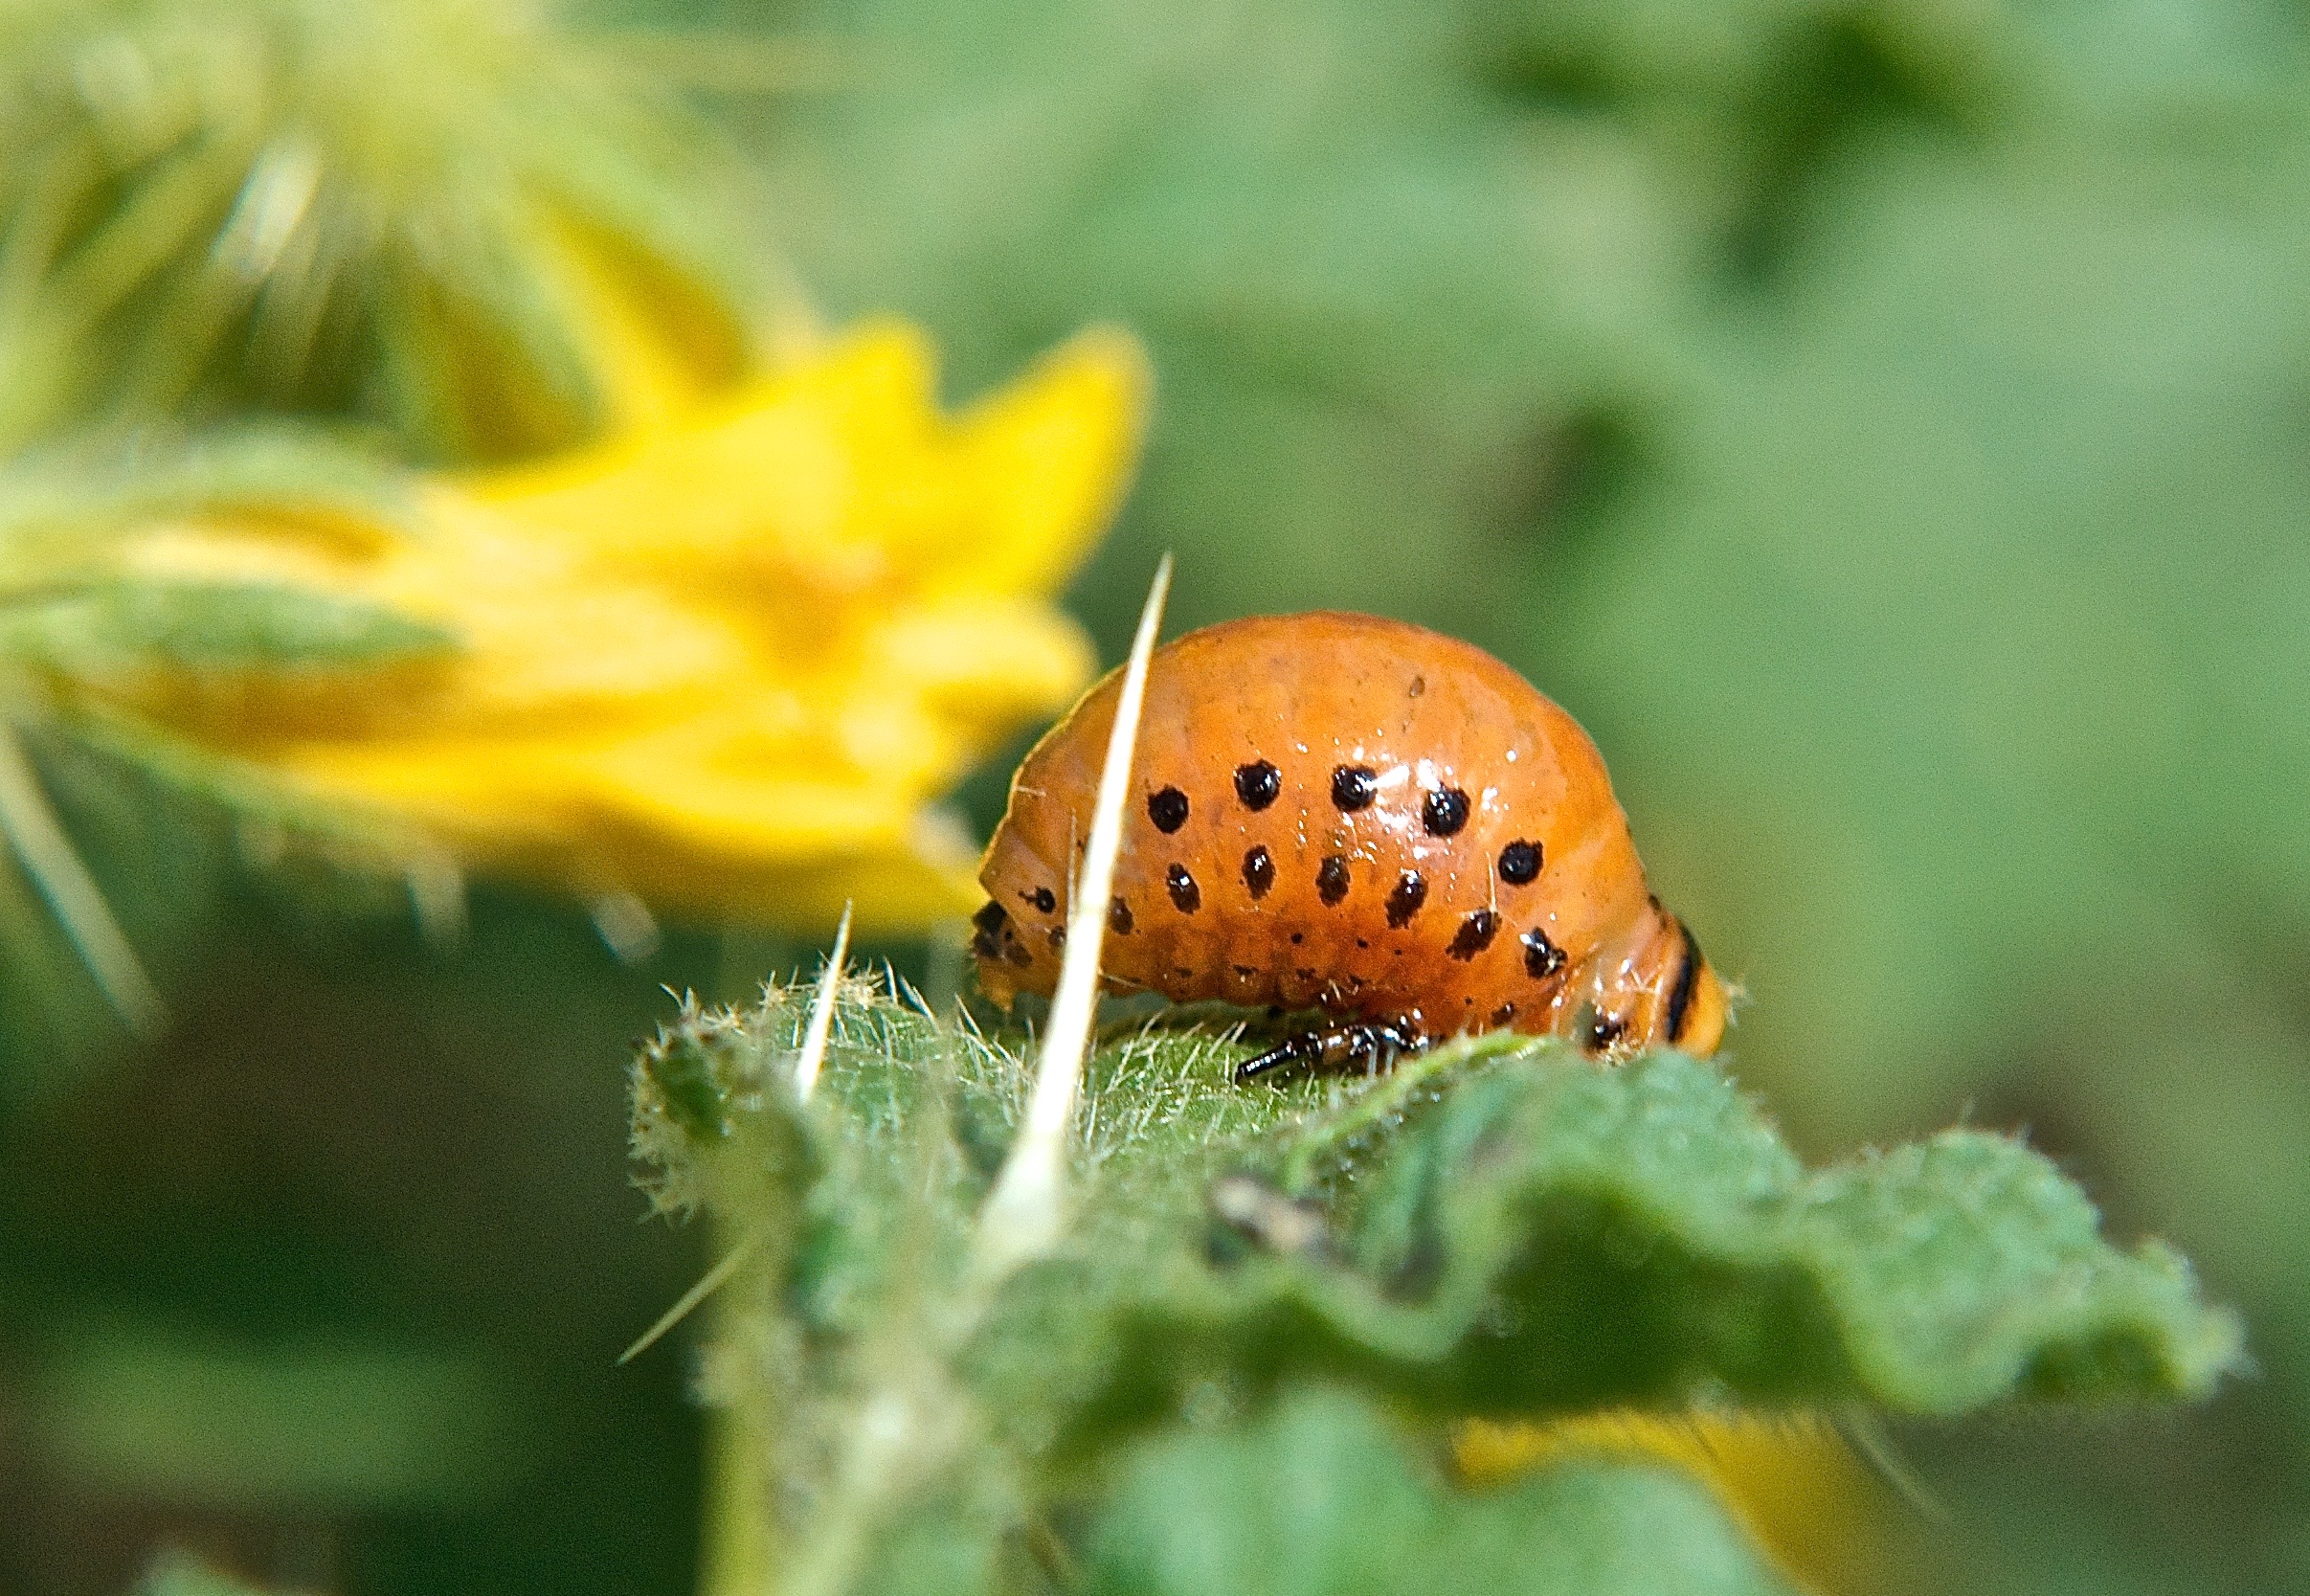 Colorado Potato Beetle, larval form